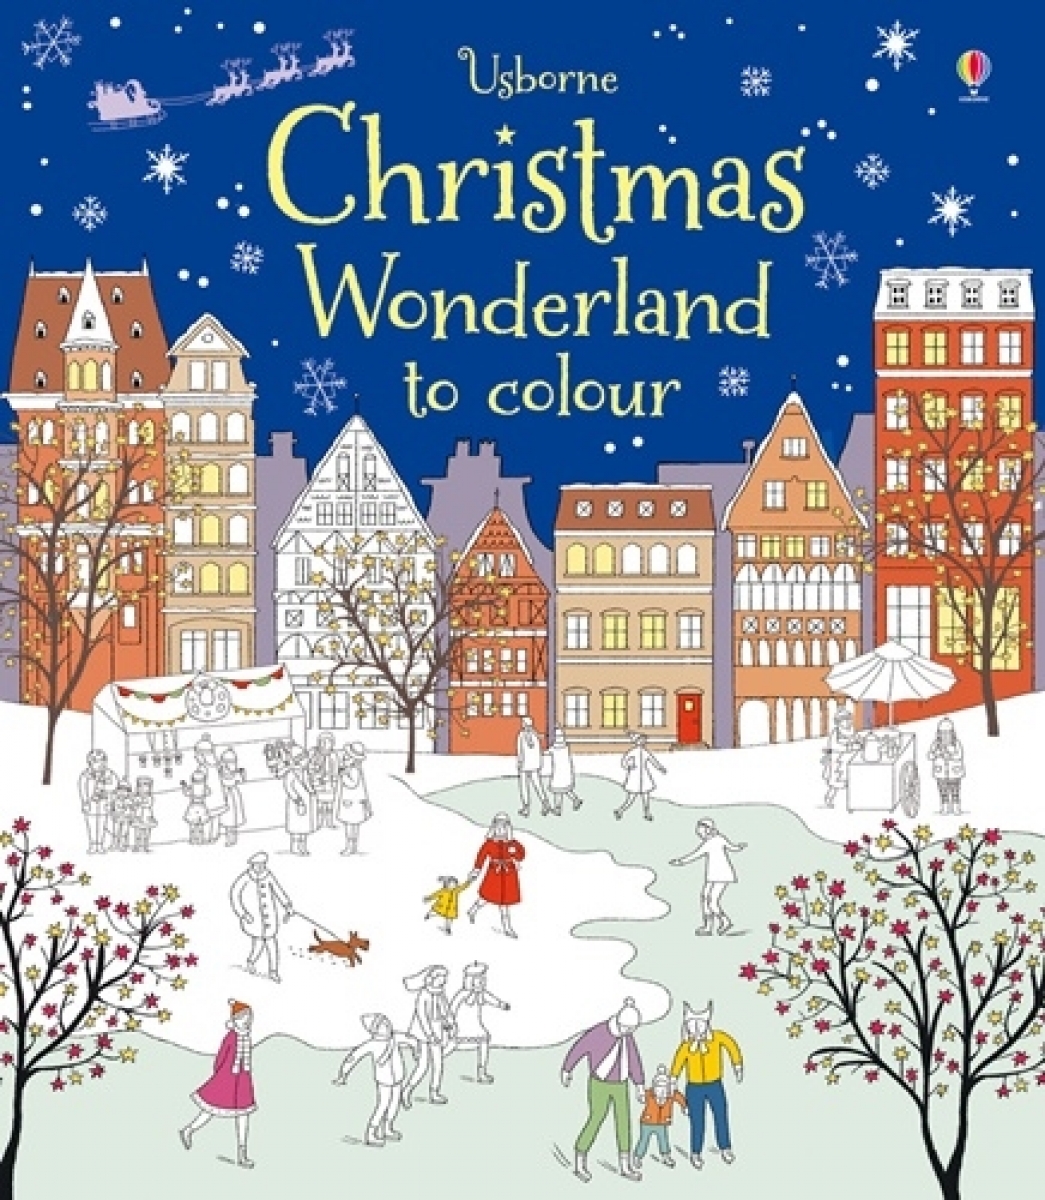 Wheatley A. Christmas Wonderland to Colour 